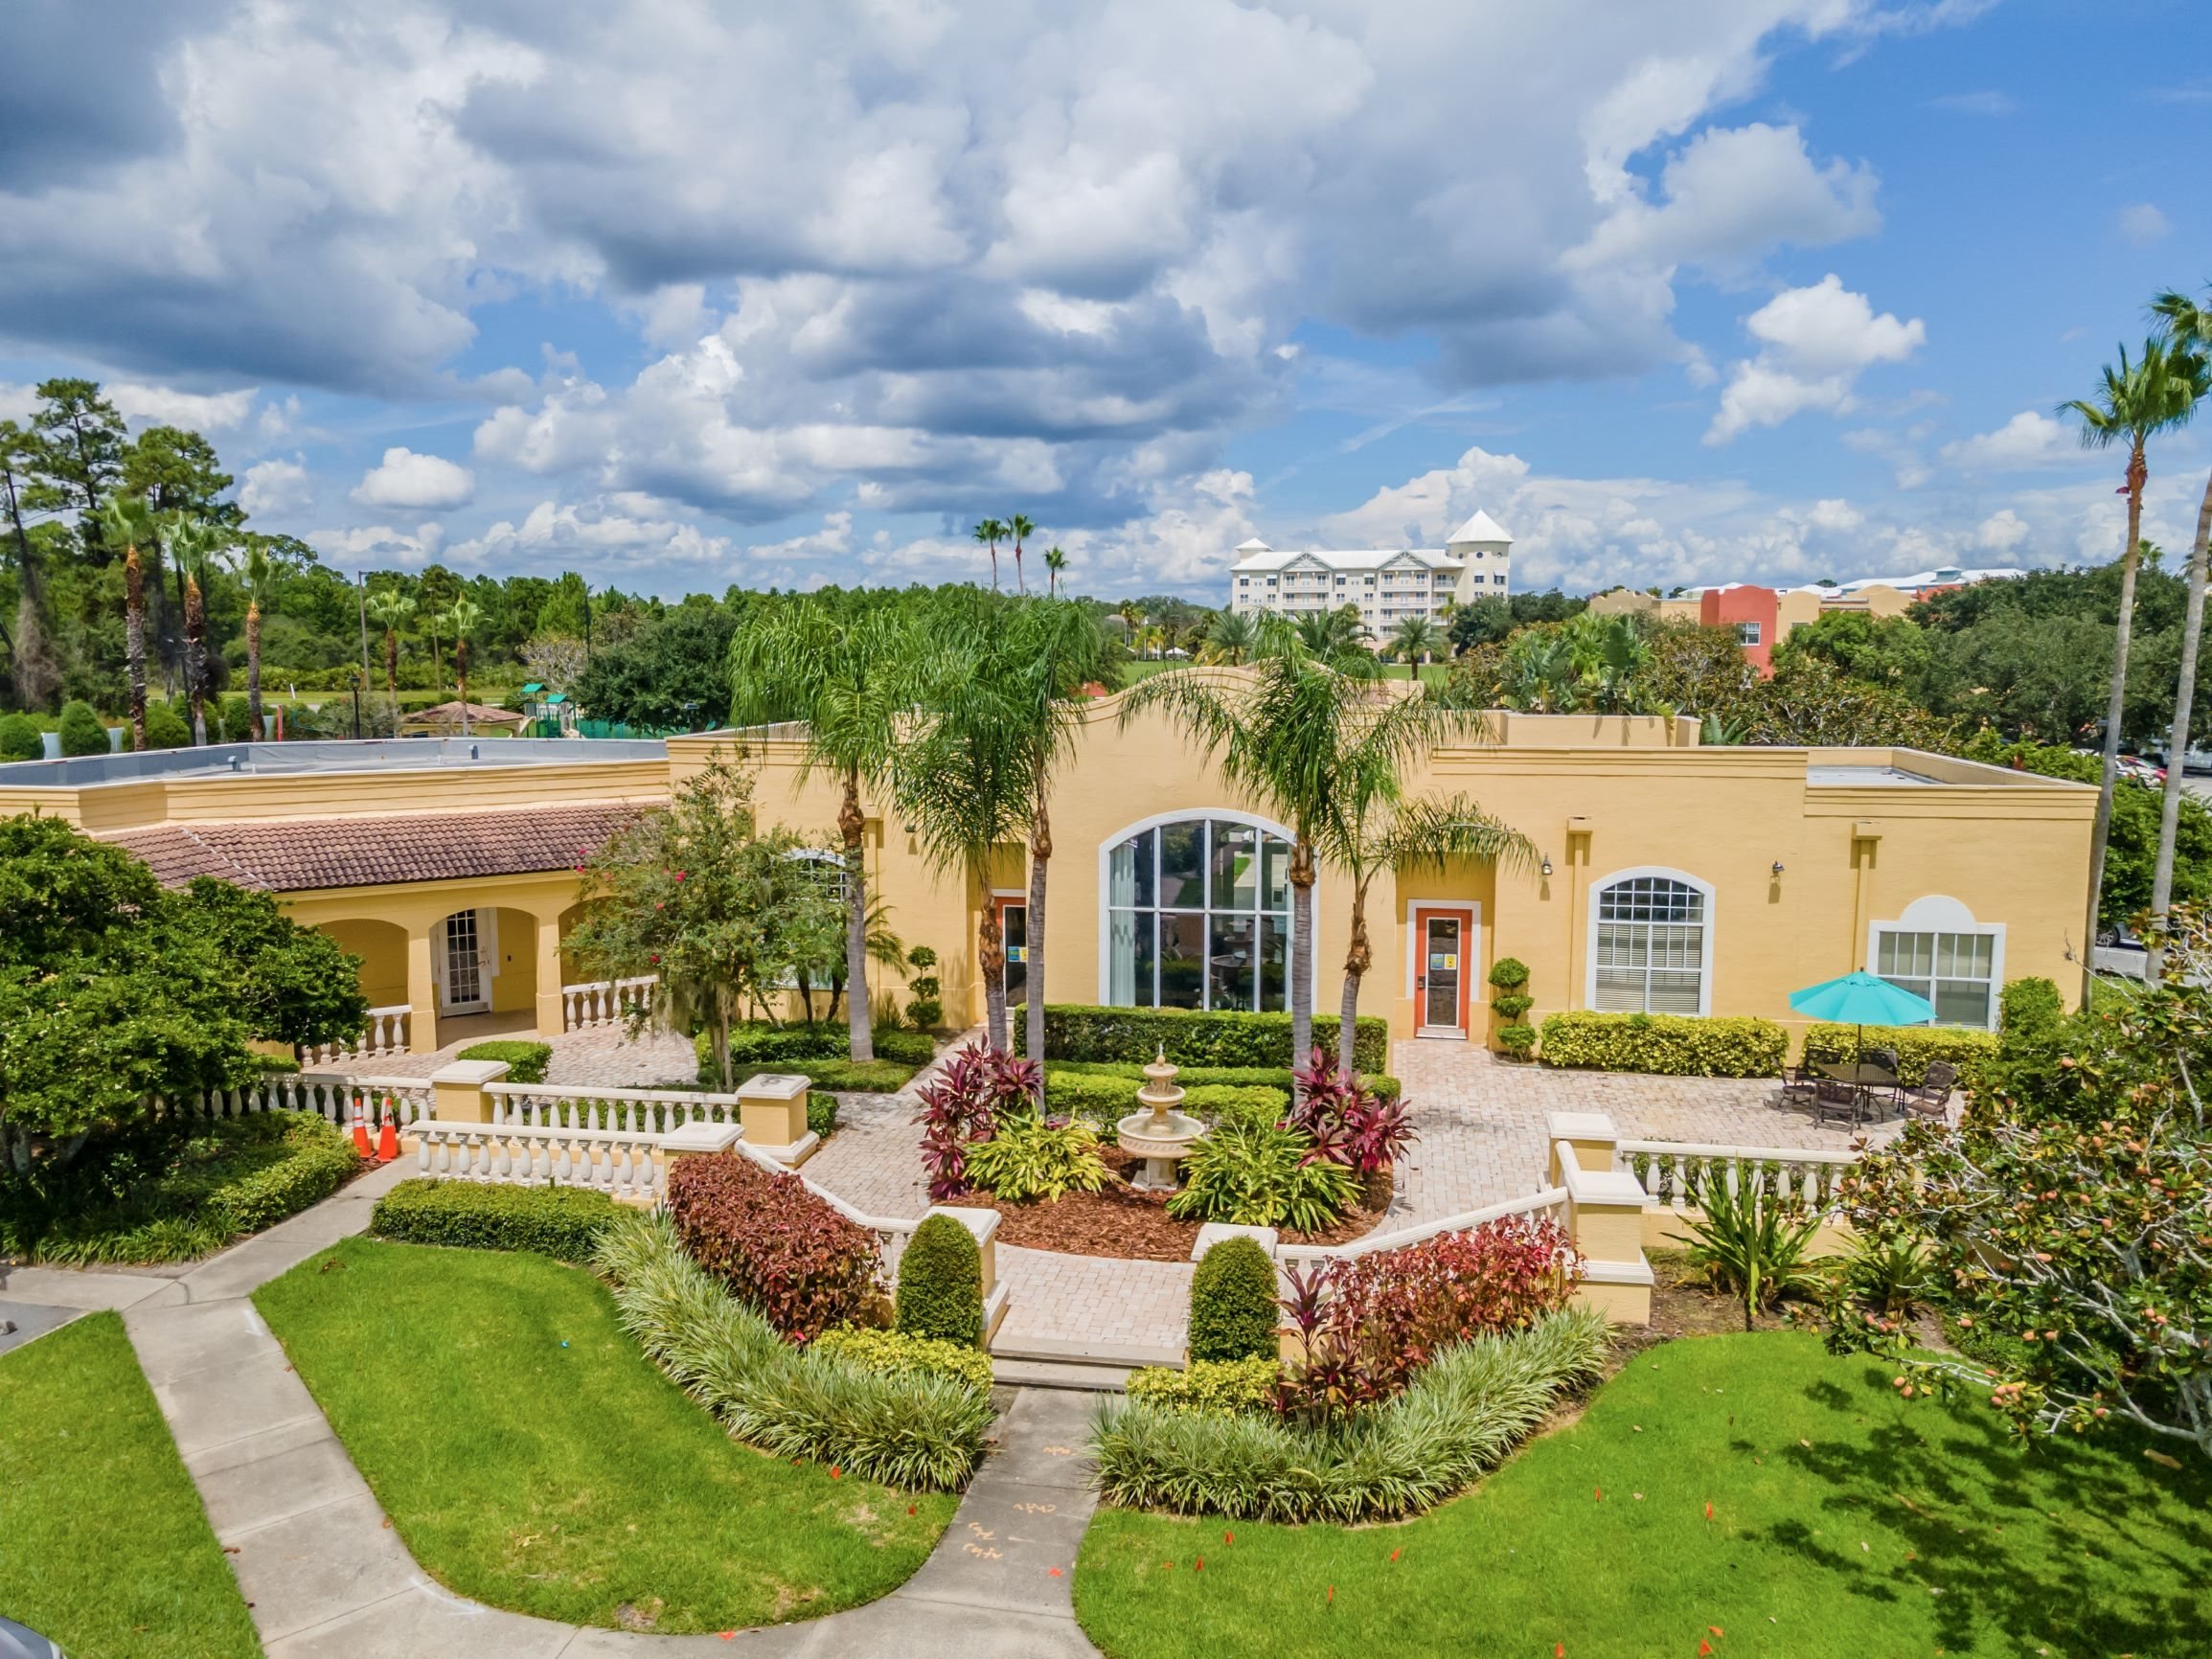 Exterior Views of Mission Club Apartments in Orlando, FL